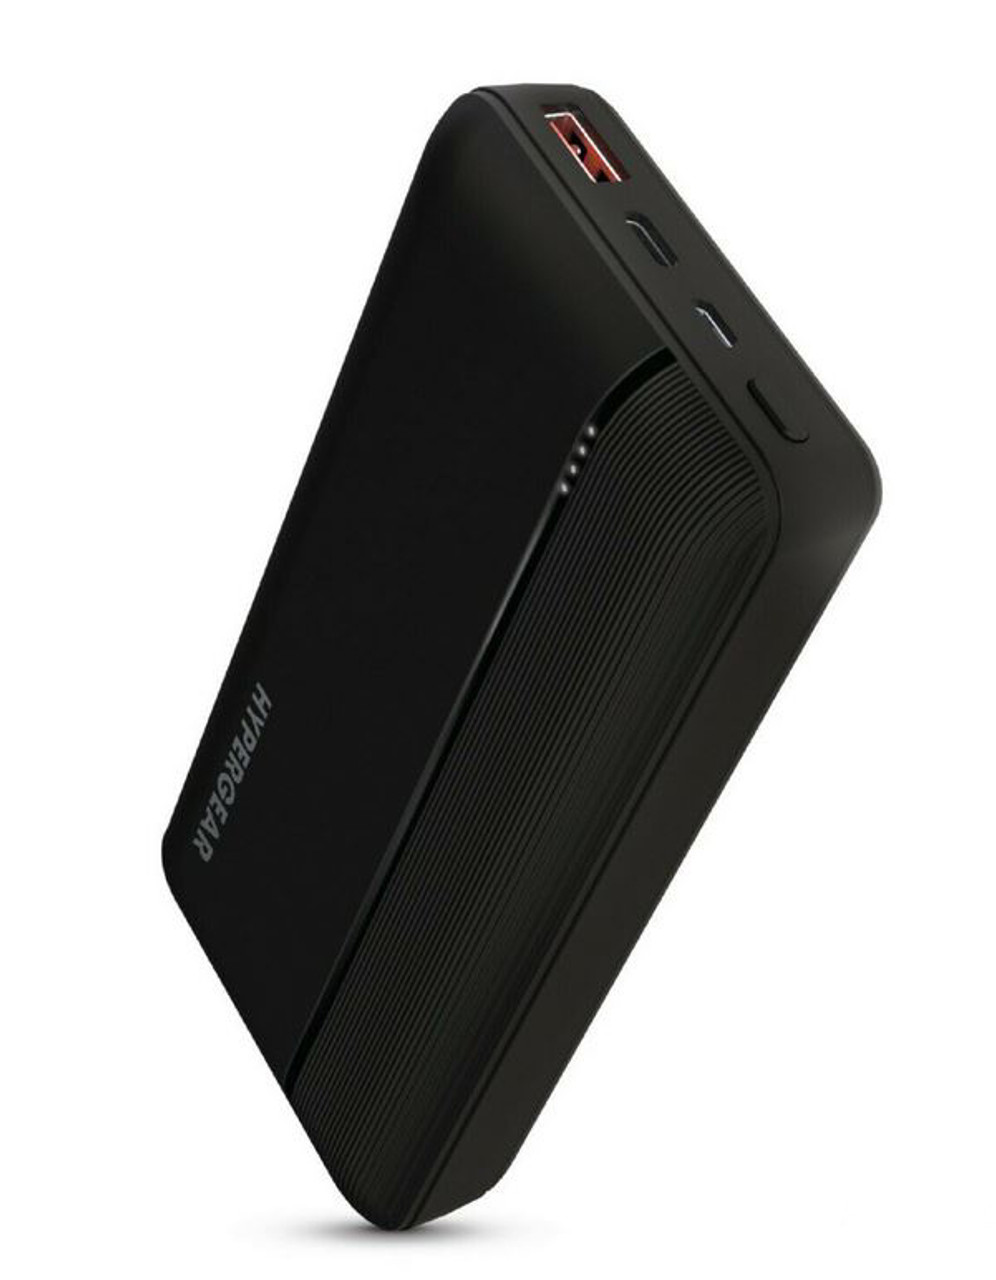 Gearmo 20000mAh Type-C Portable Ultra High Capacity Power Bank